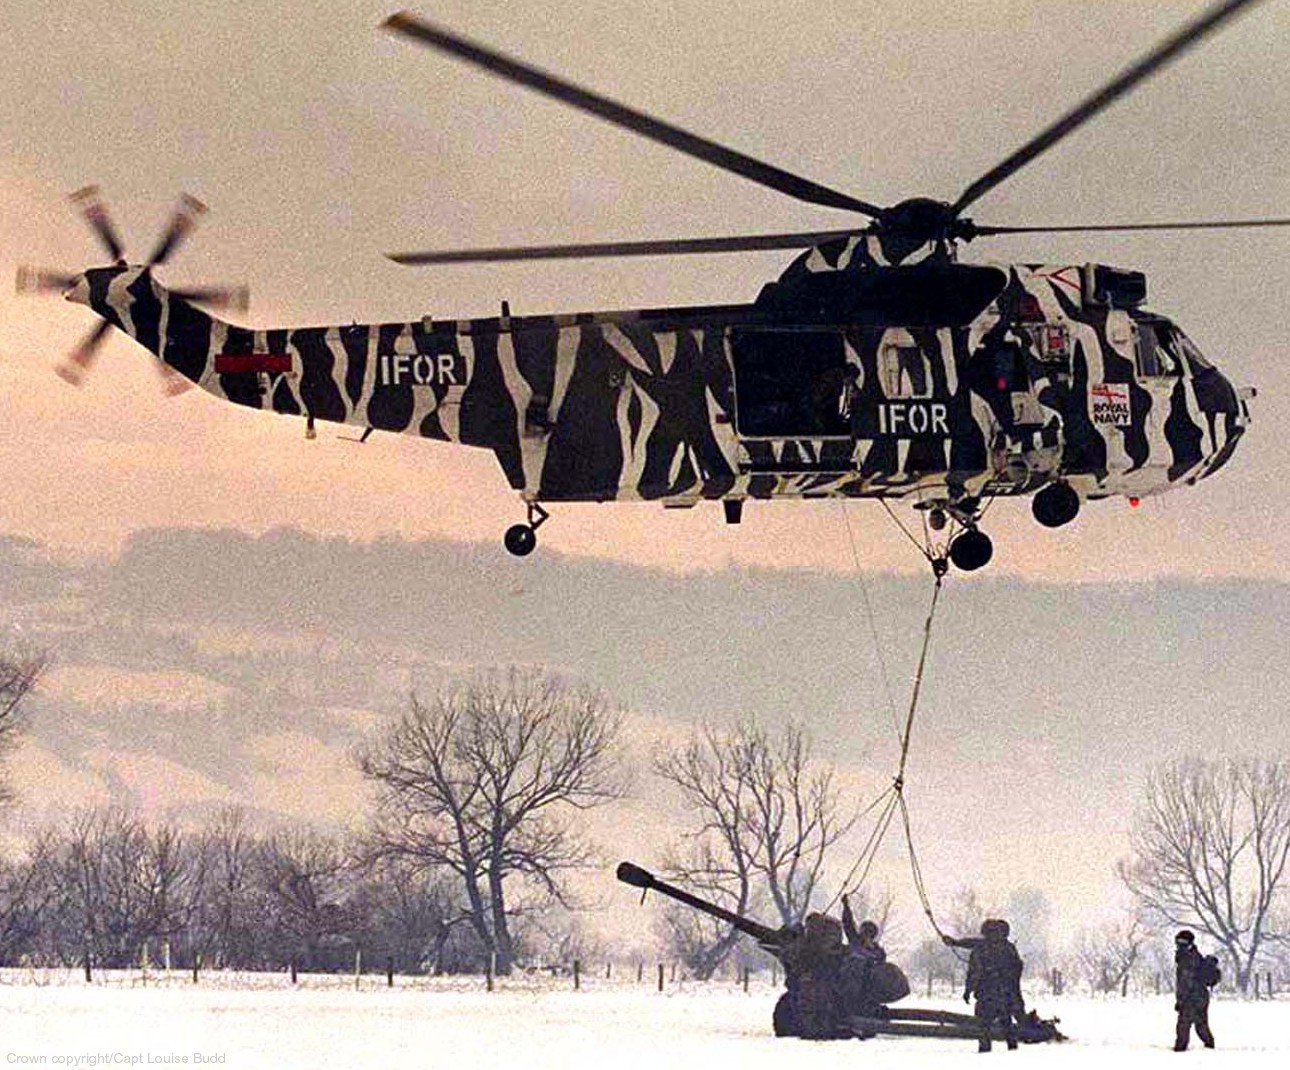 sea king hc.4 helicopter royal navy commando assault marines westland nas squadron rnas 55 nato ifor yugoslavia